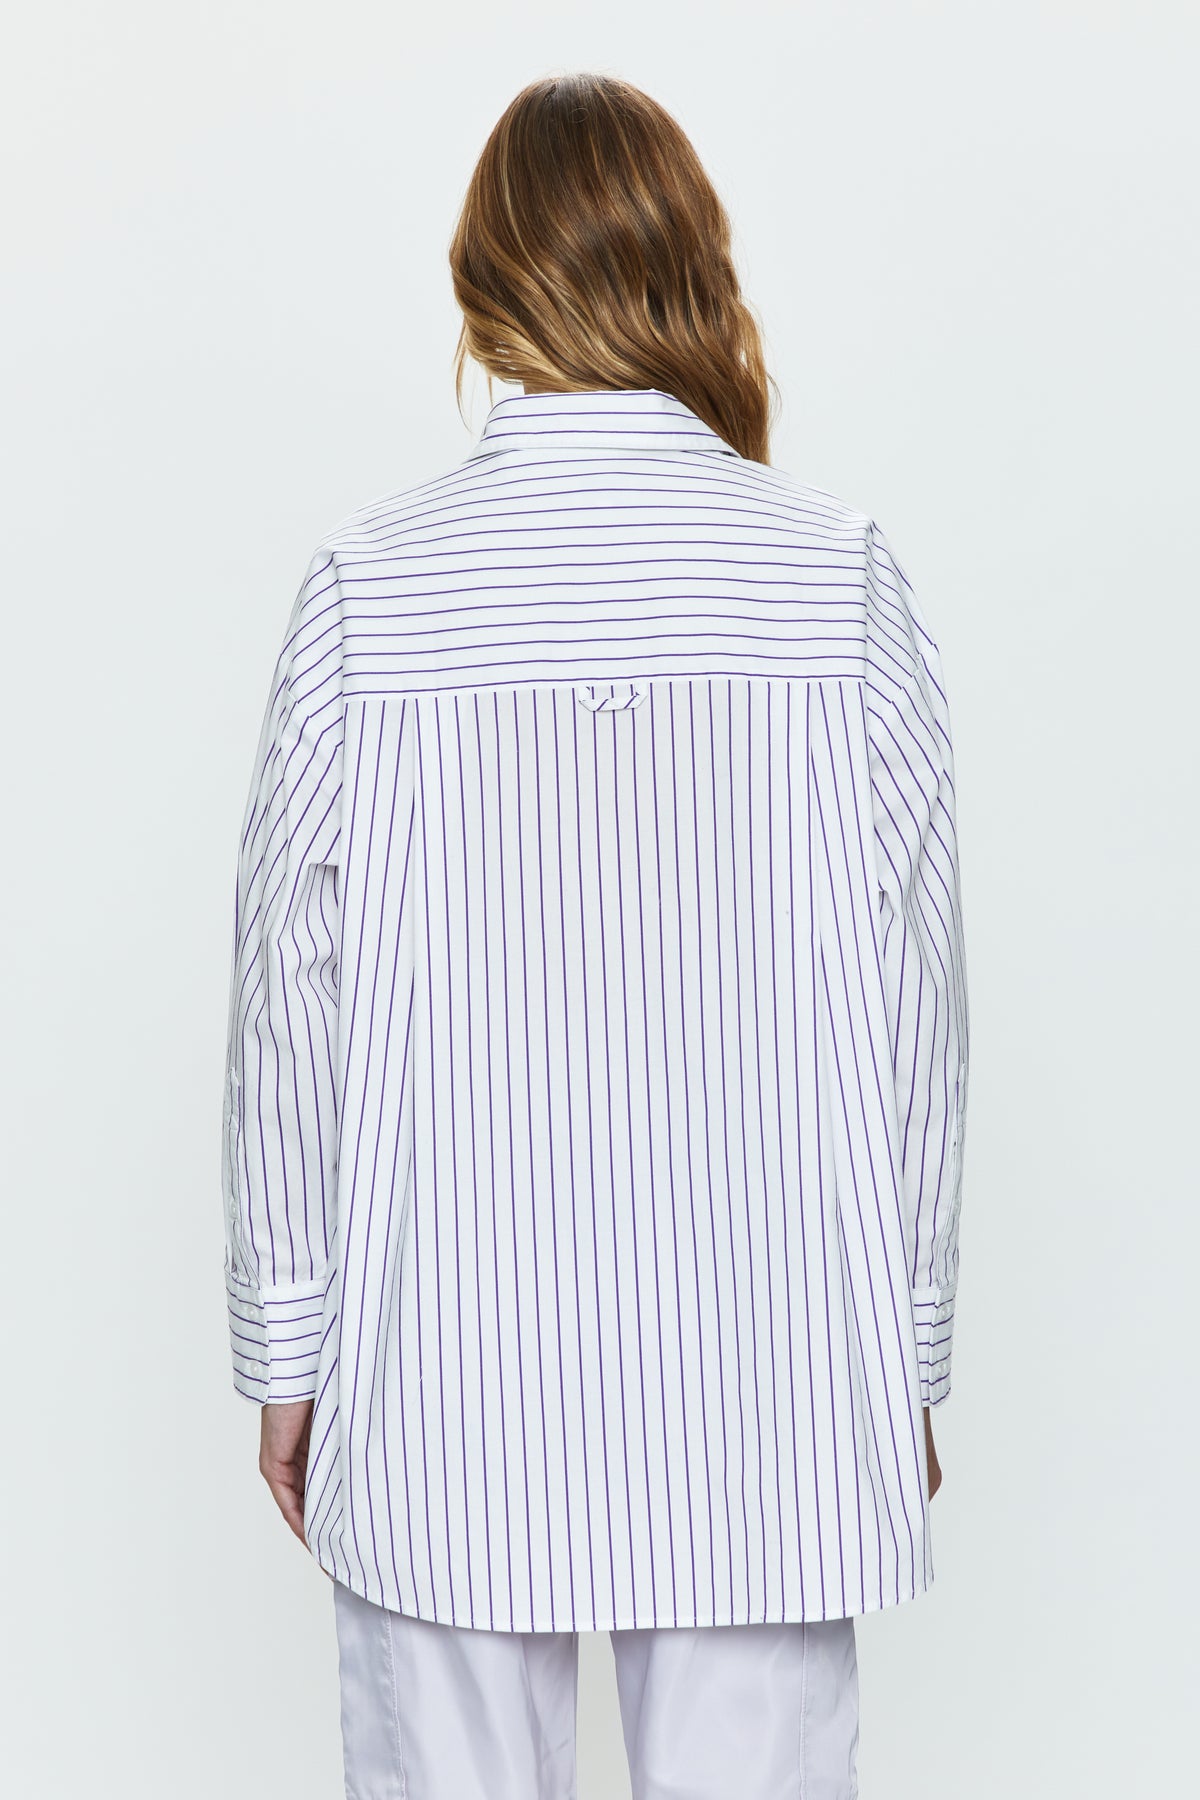 Rena Button Down Shirt - Violette Stripe